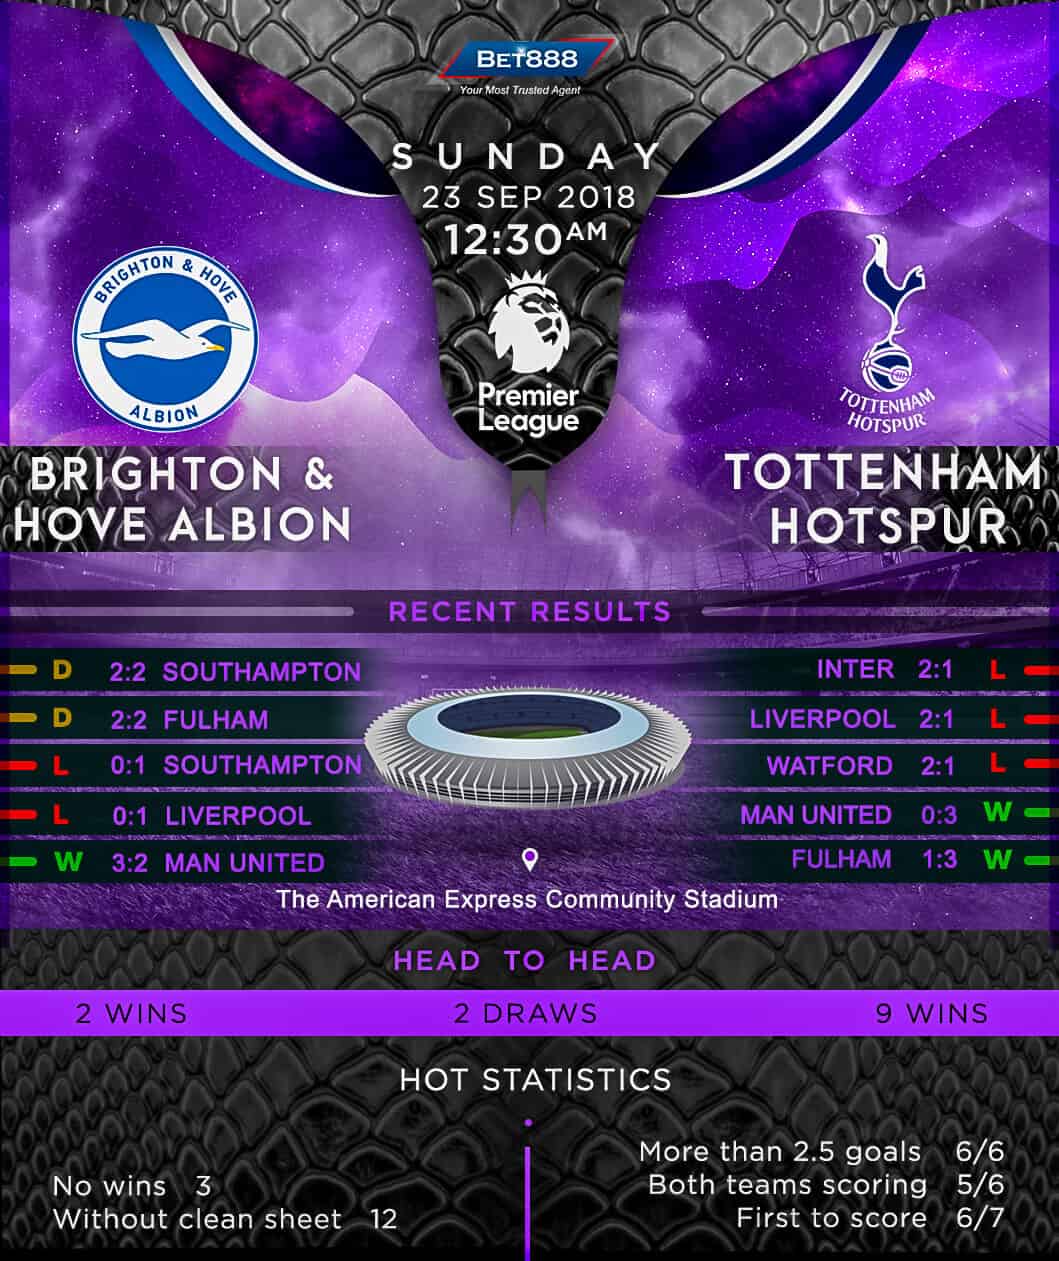 Brighton & Hove Albion vs Tottenham Hotspur 23/09/18